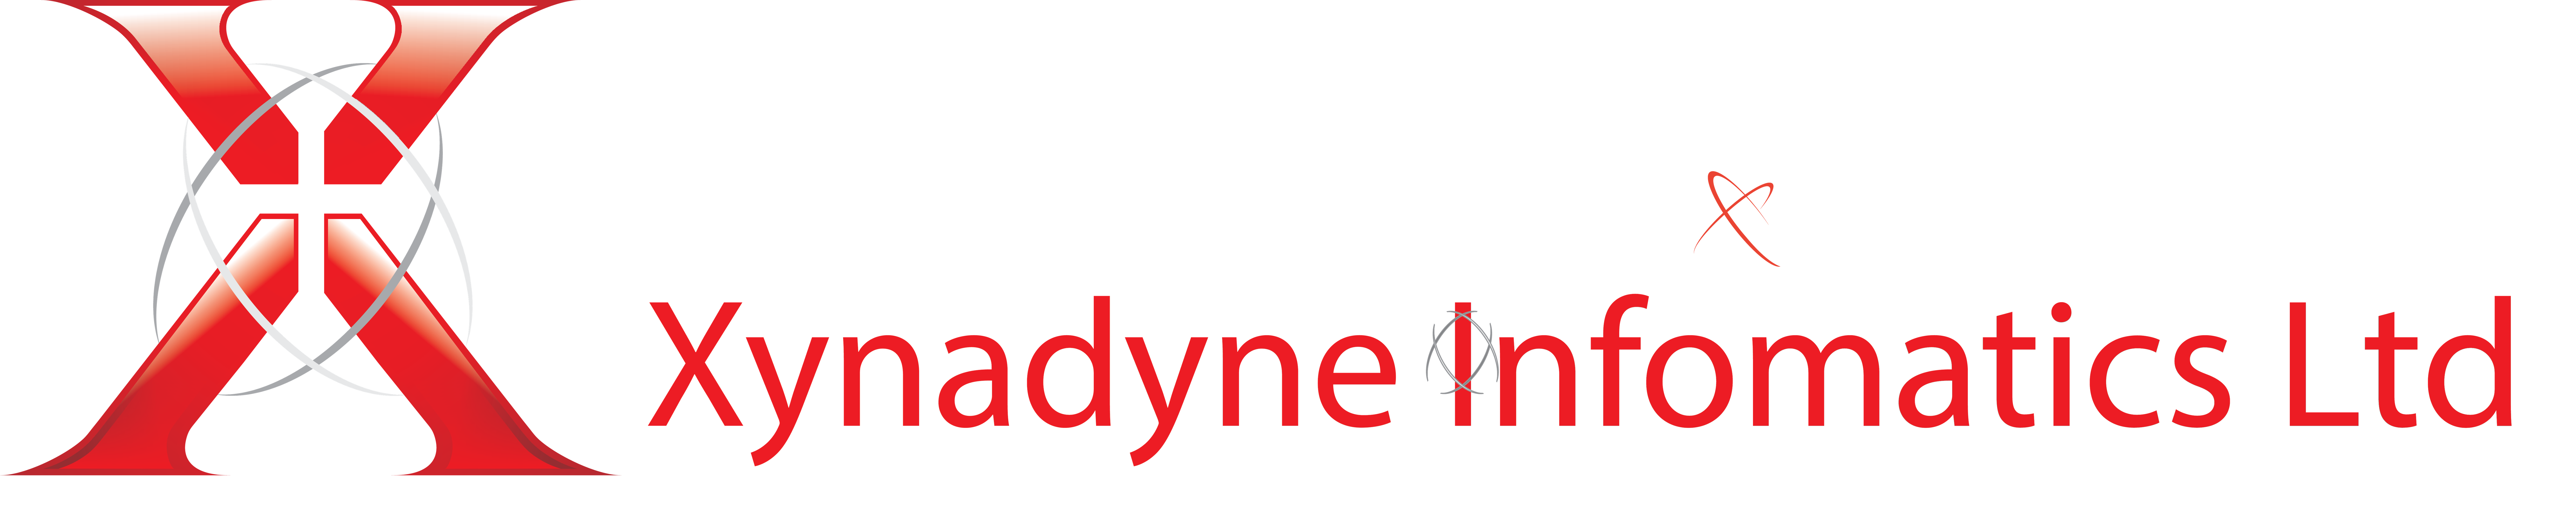 Xynadyne_Logo_Grey